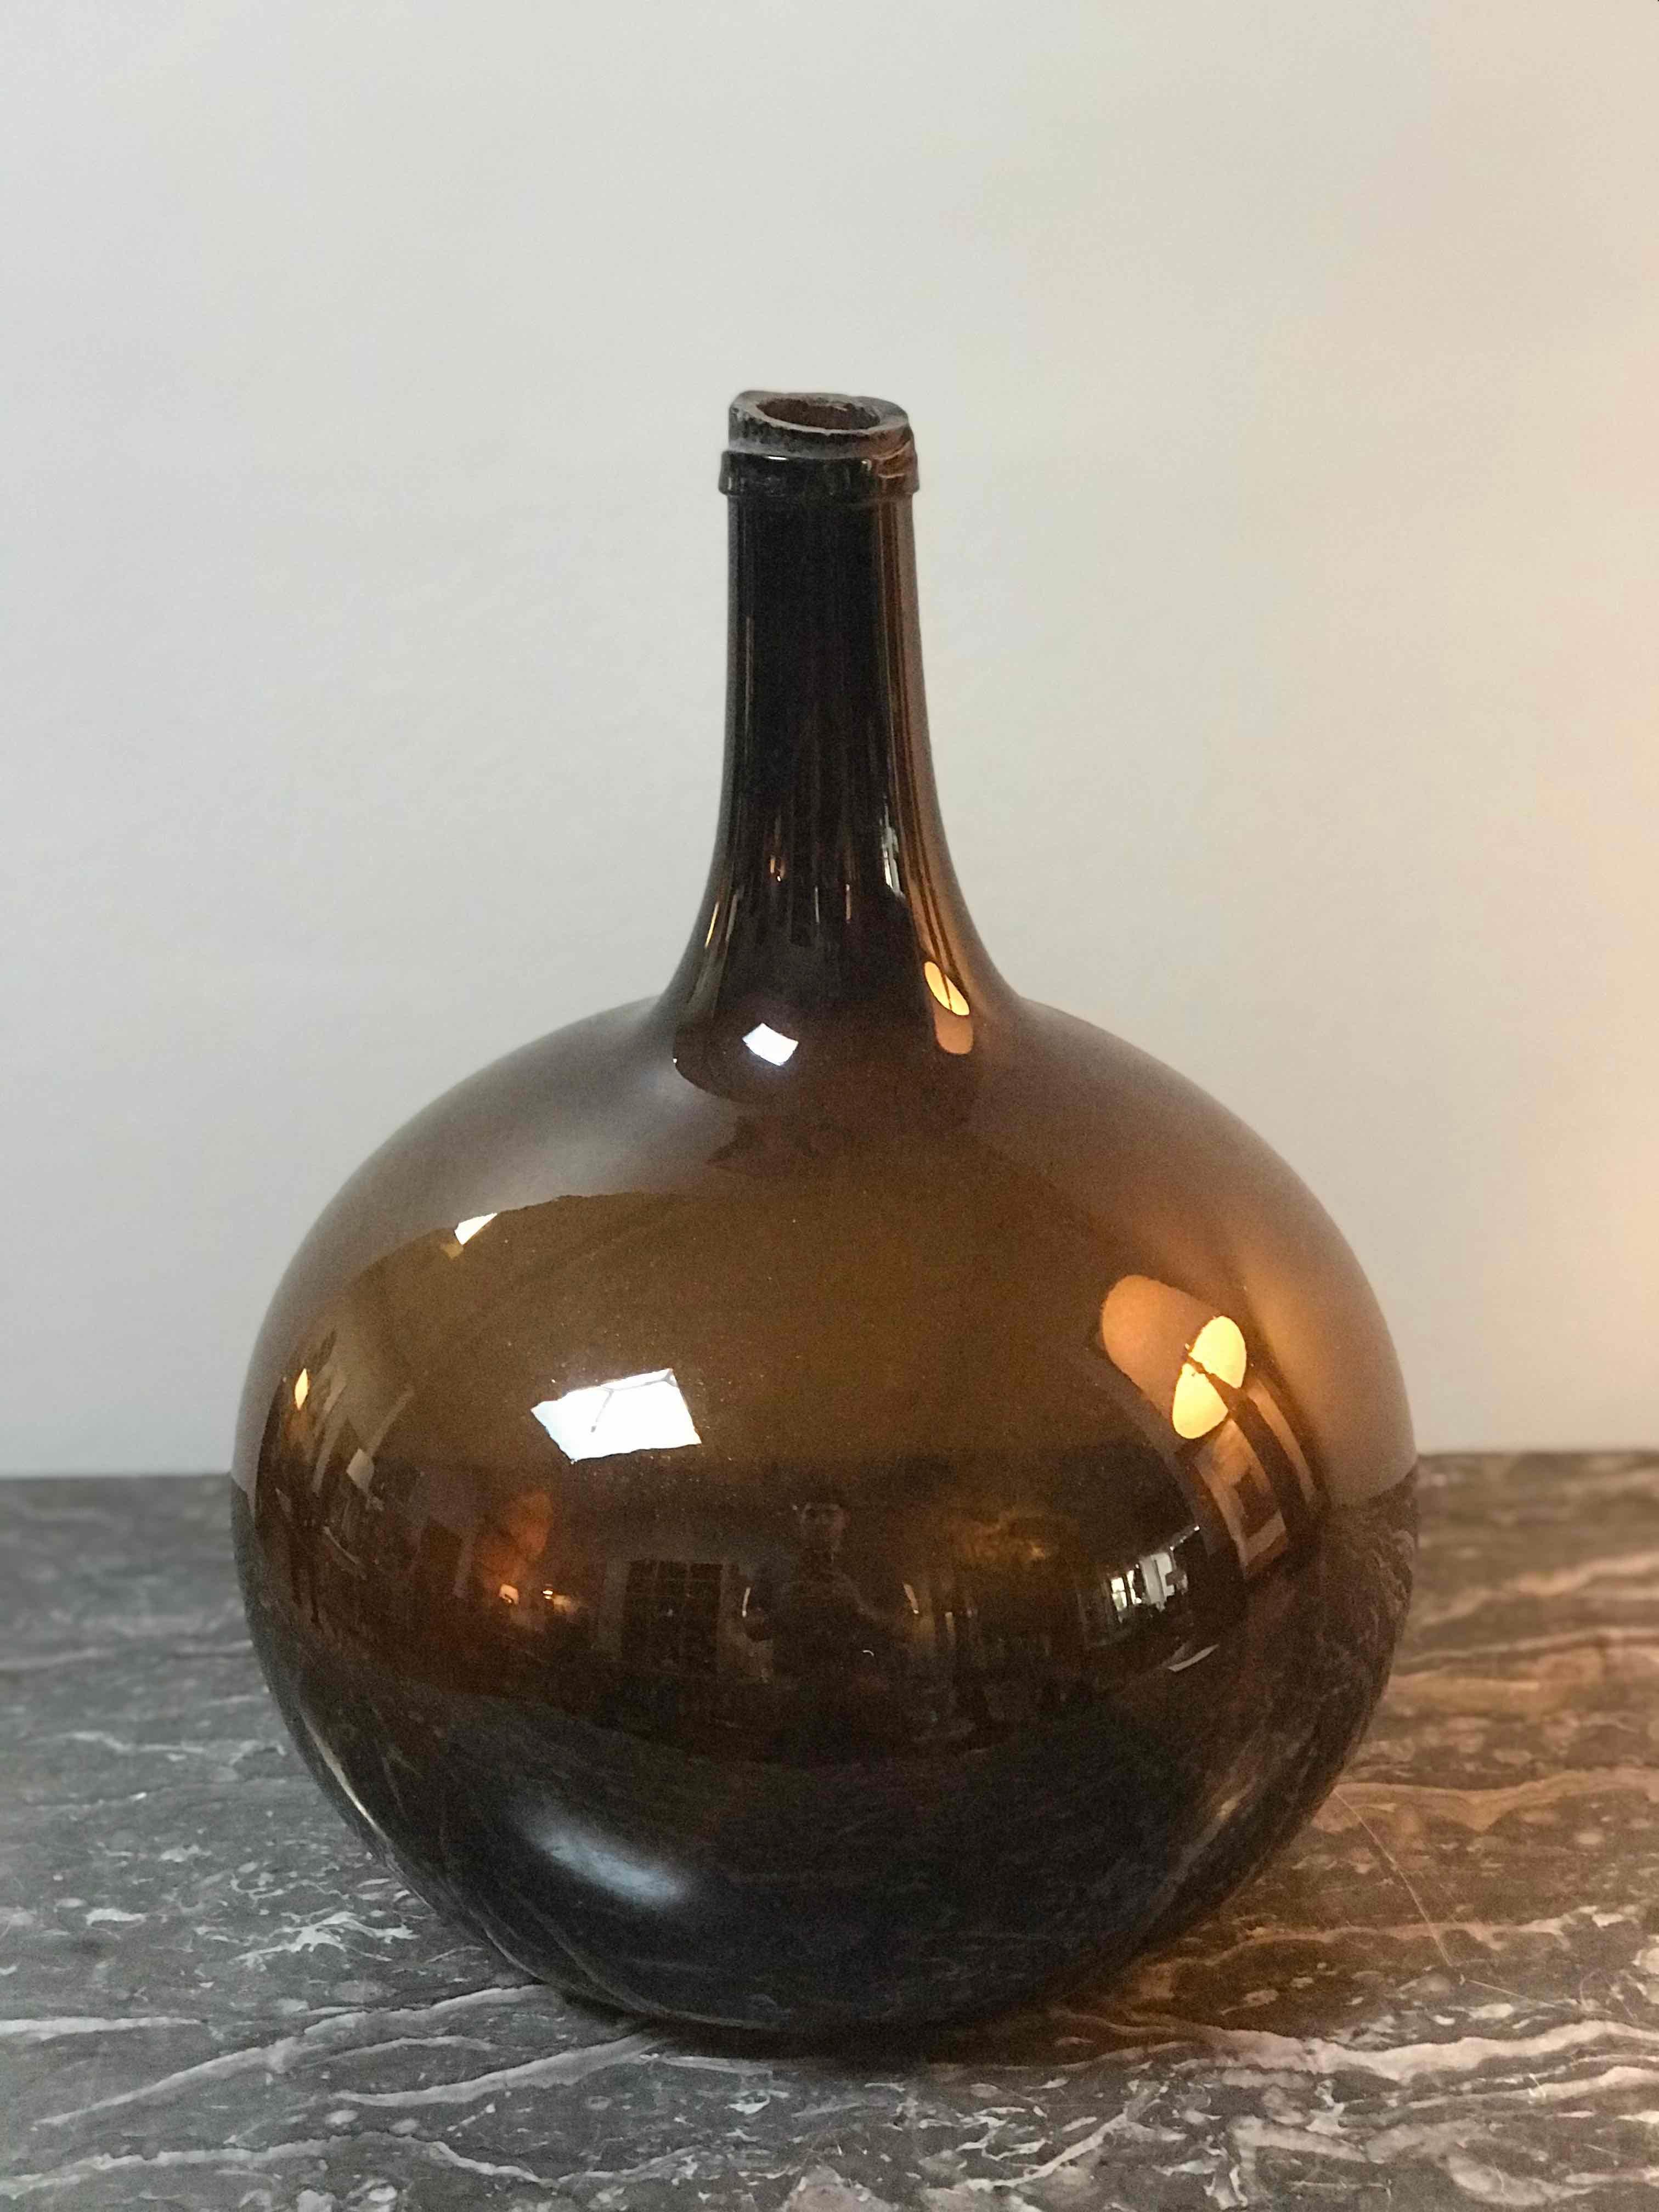 19th century brown blown glass bottle or spirit keg from Burgundy, France. 